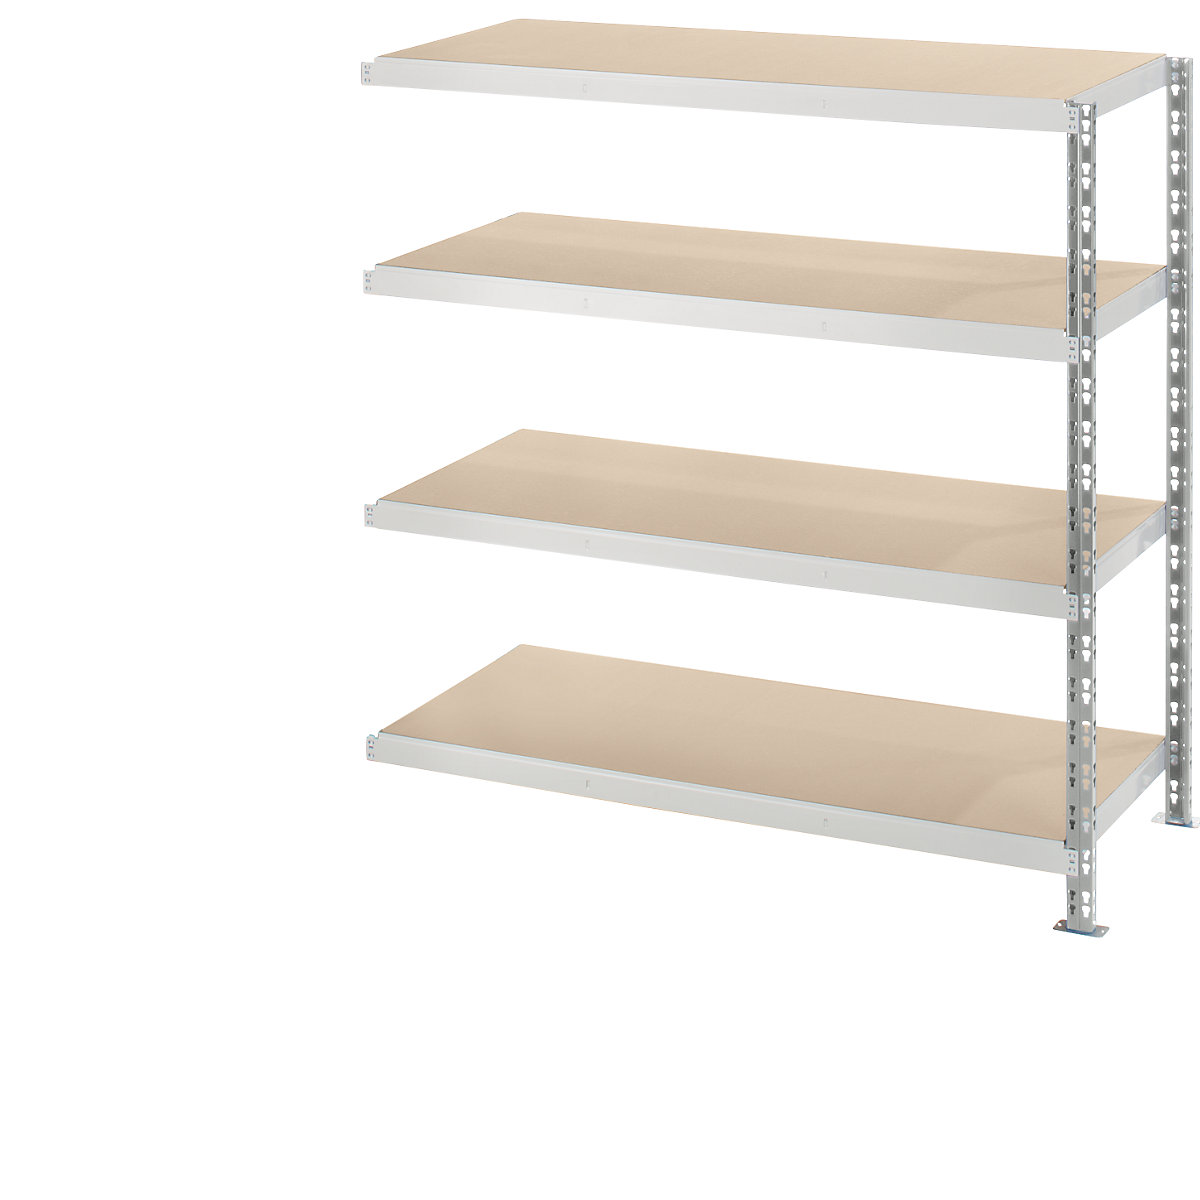 Wide span boltless shelf unit with moulded chipboard shelves, depth 600 mm, extension shelf unit, HxW 1508 x 1525 mm